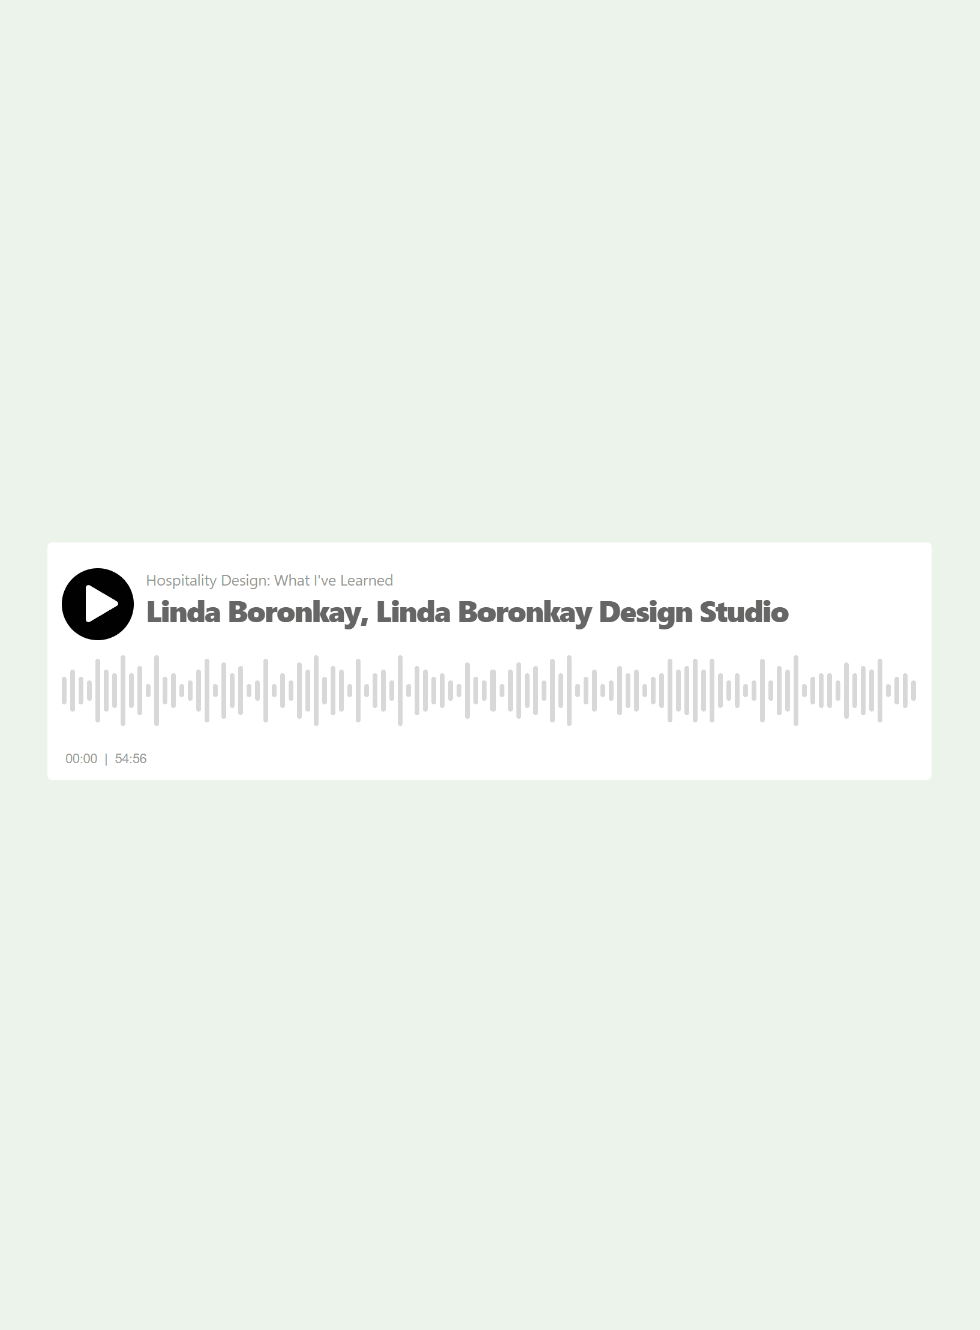 What I've Learned Podcast: Linda Boronkay